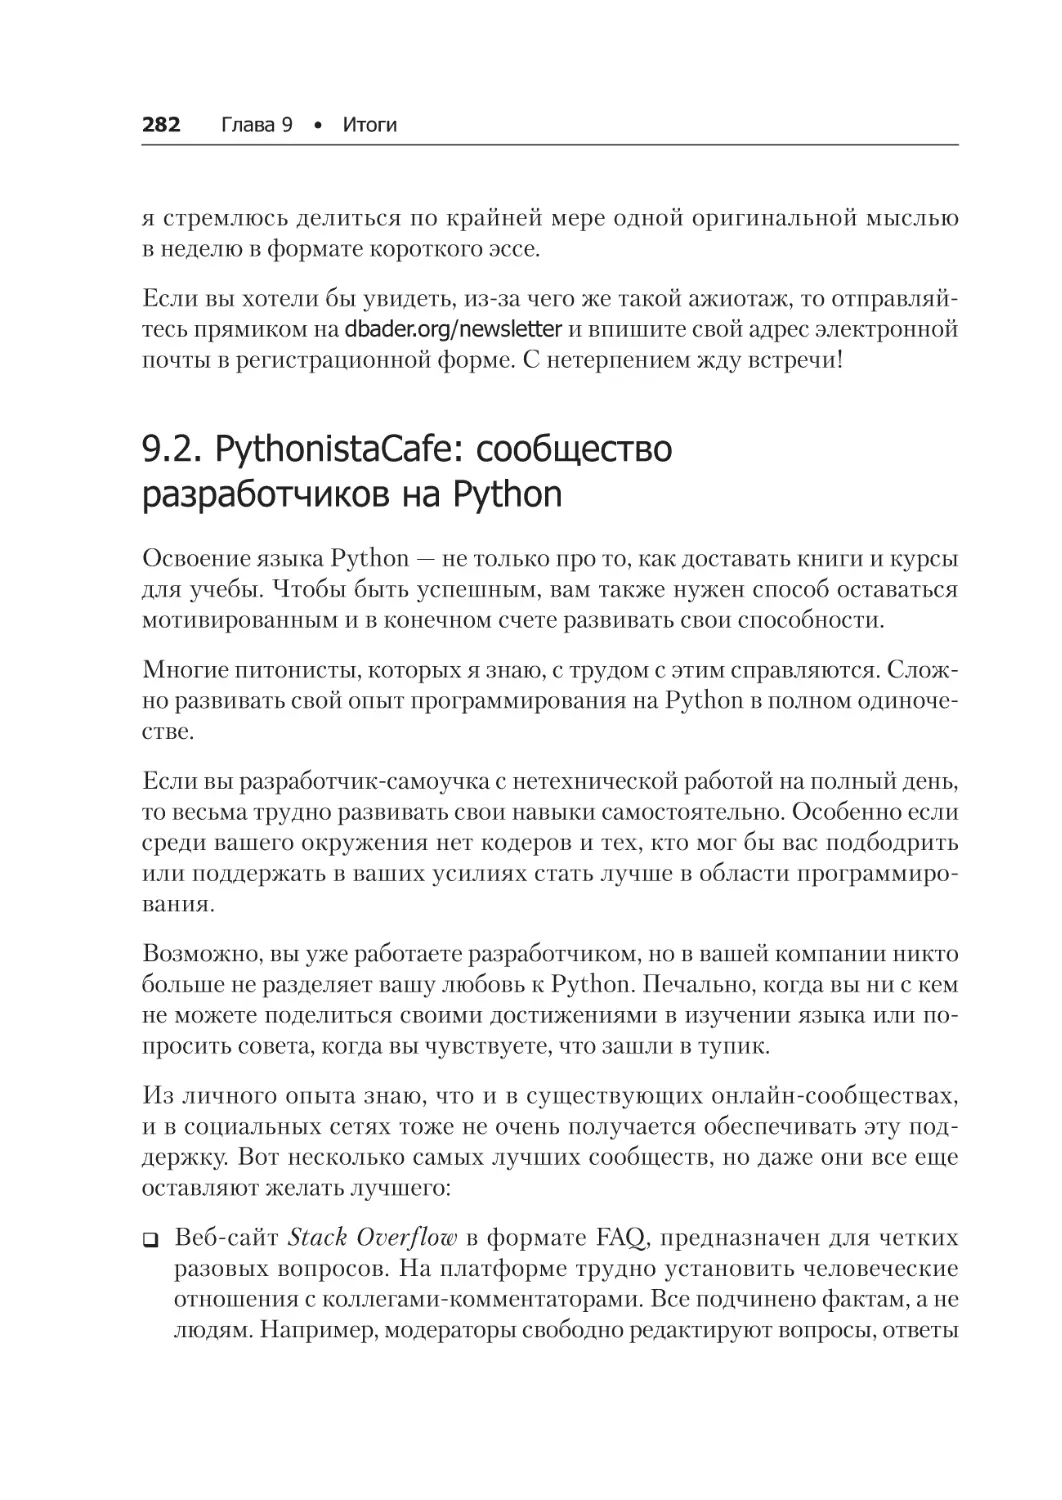 9.2. PythonistaCafe